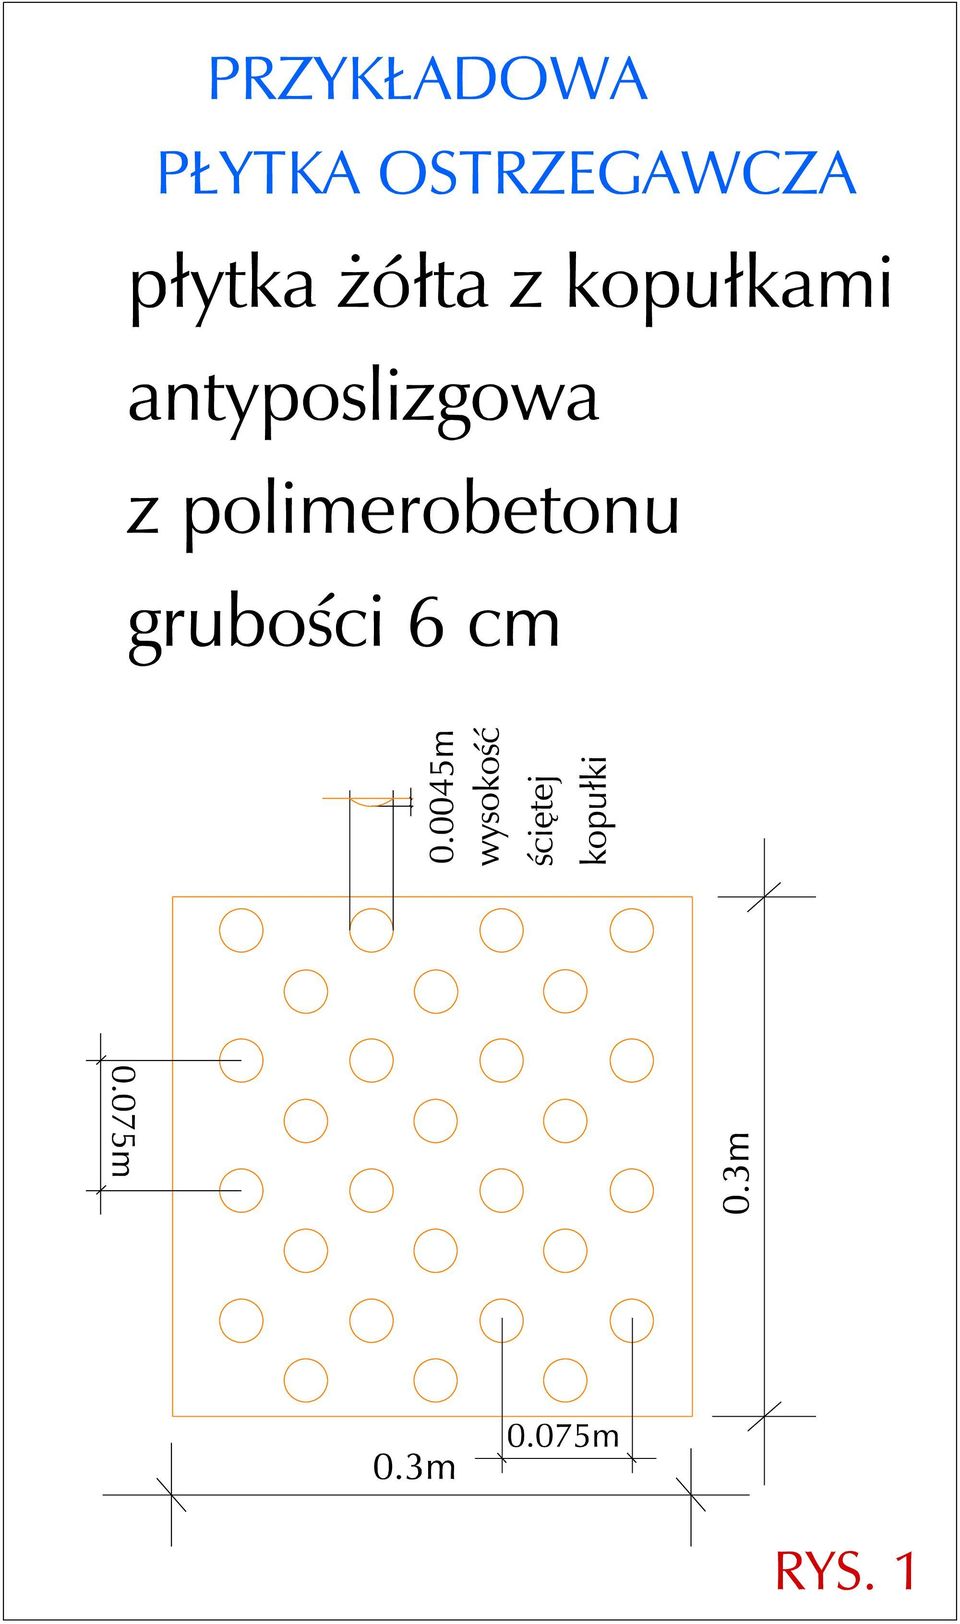 polimerobetonu gruboci 6 cm 0.075m 0.